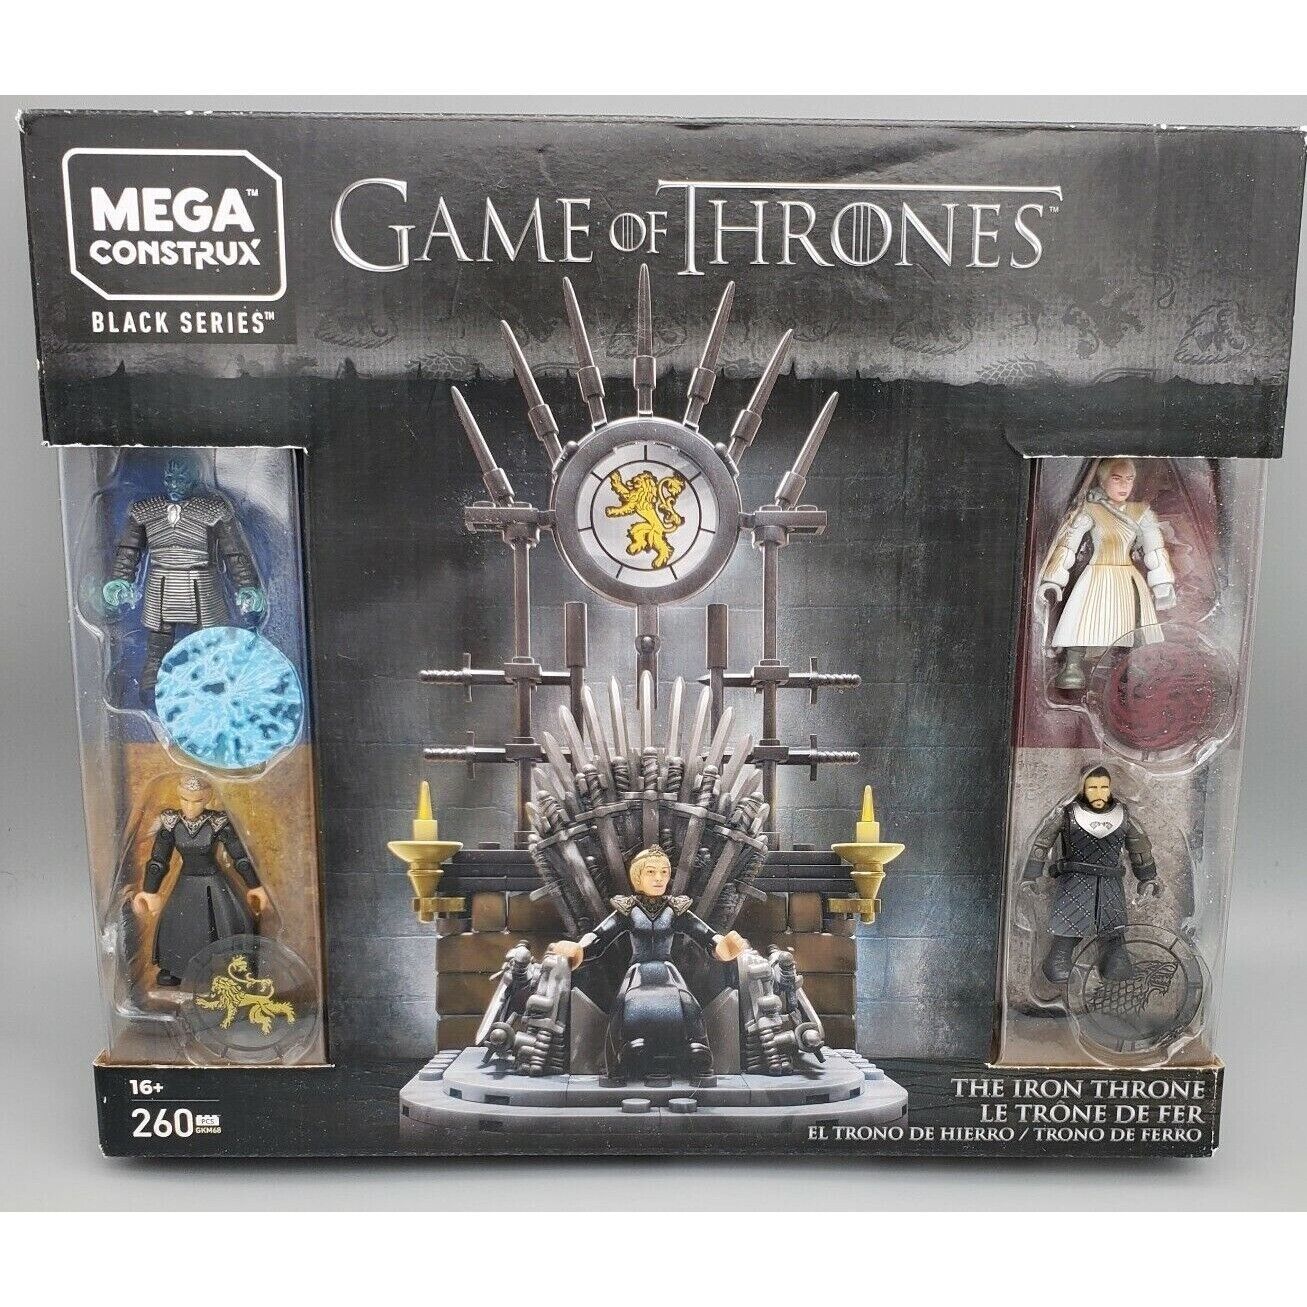 The Iron Throne Mega Construx Game of Thrones Bloks Black Series Building Set - $18.51